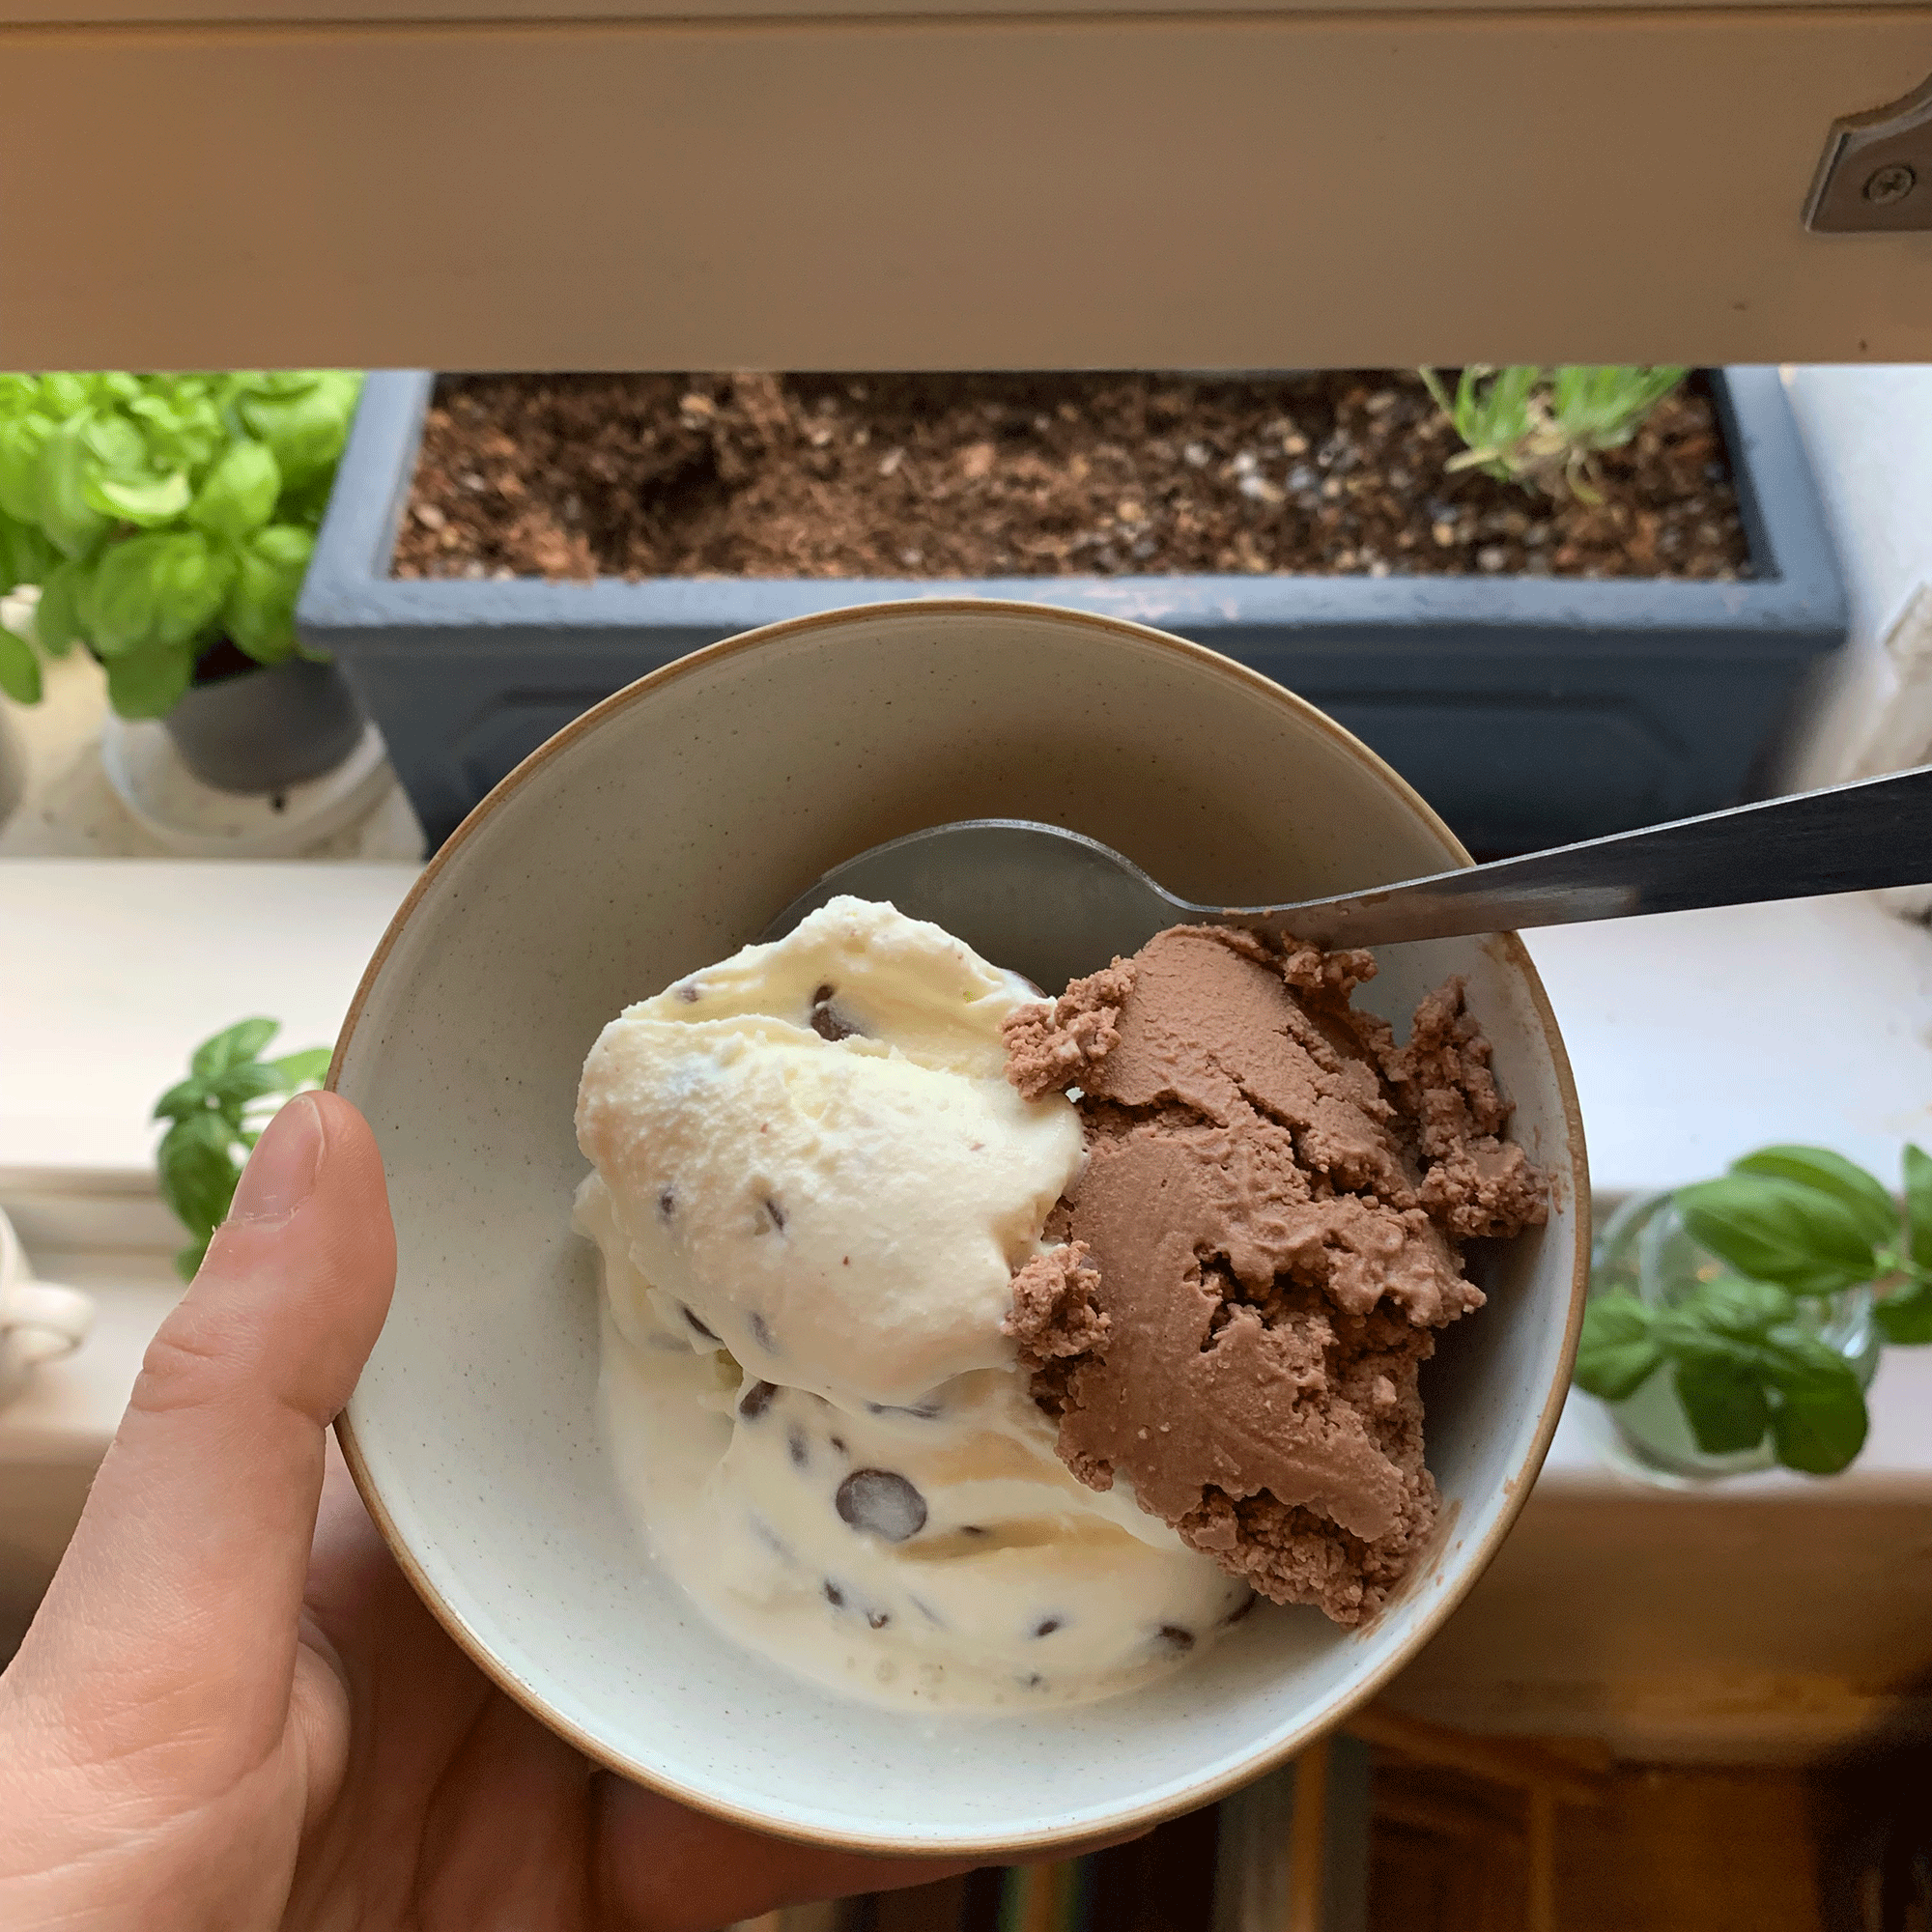 Blue bowl of ice cream in window